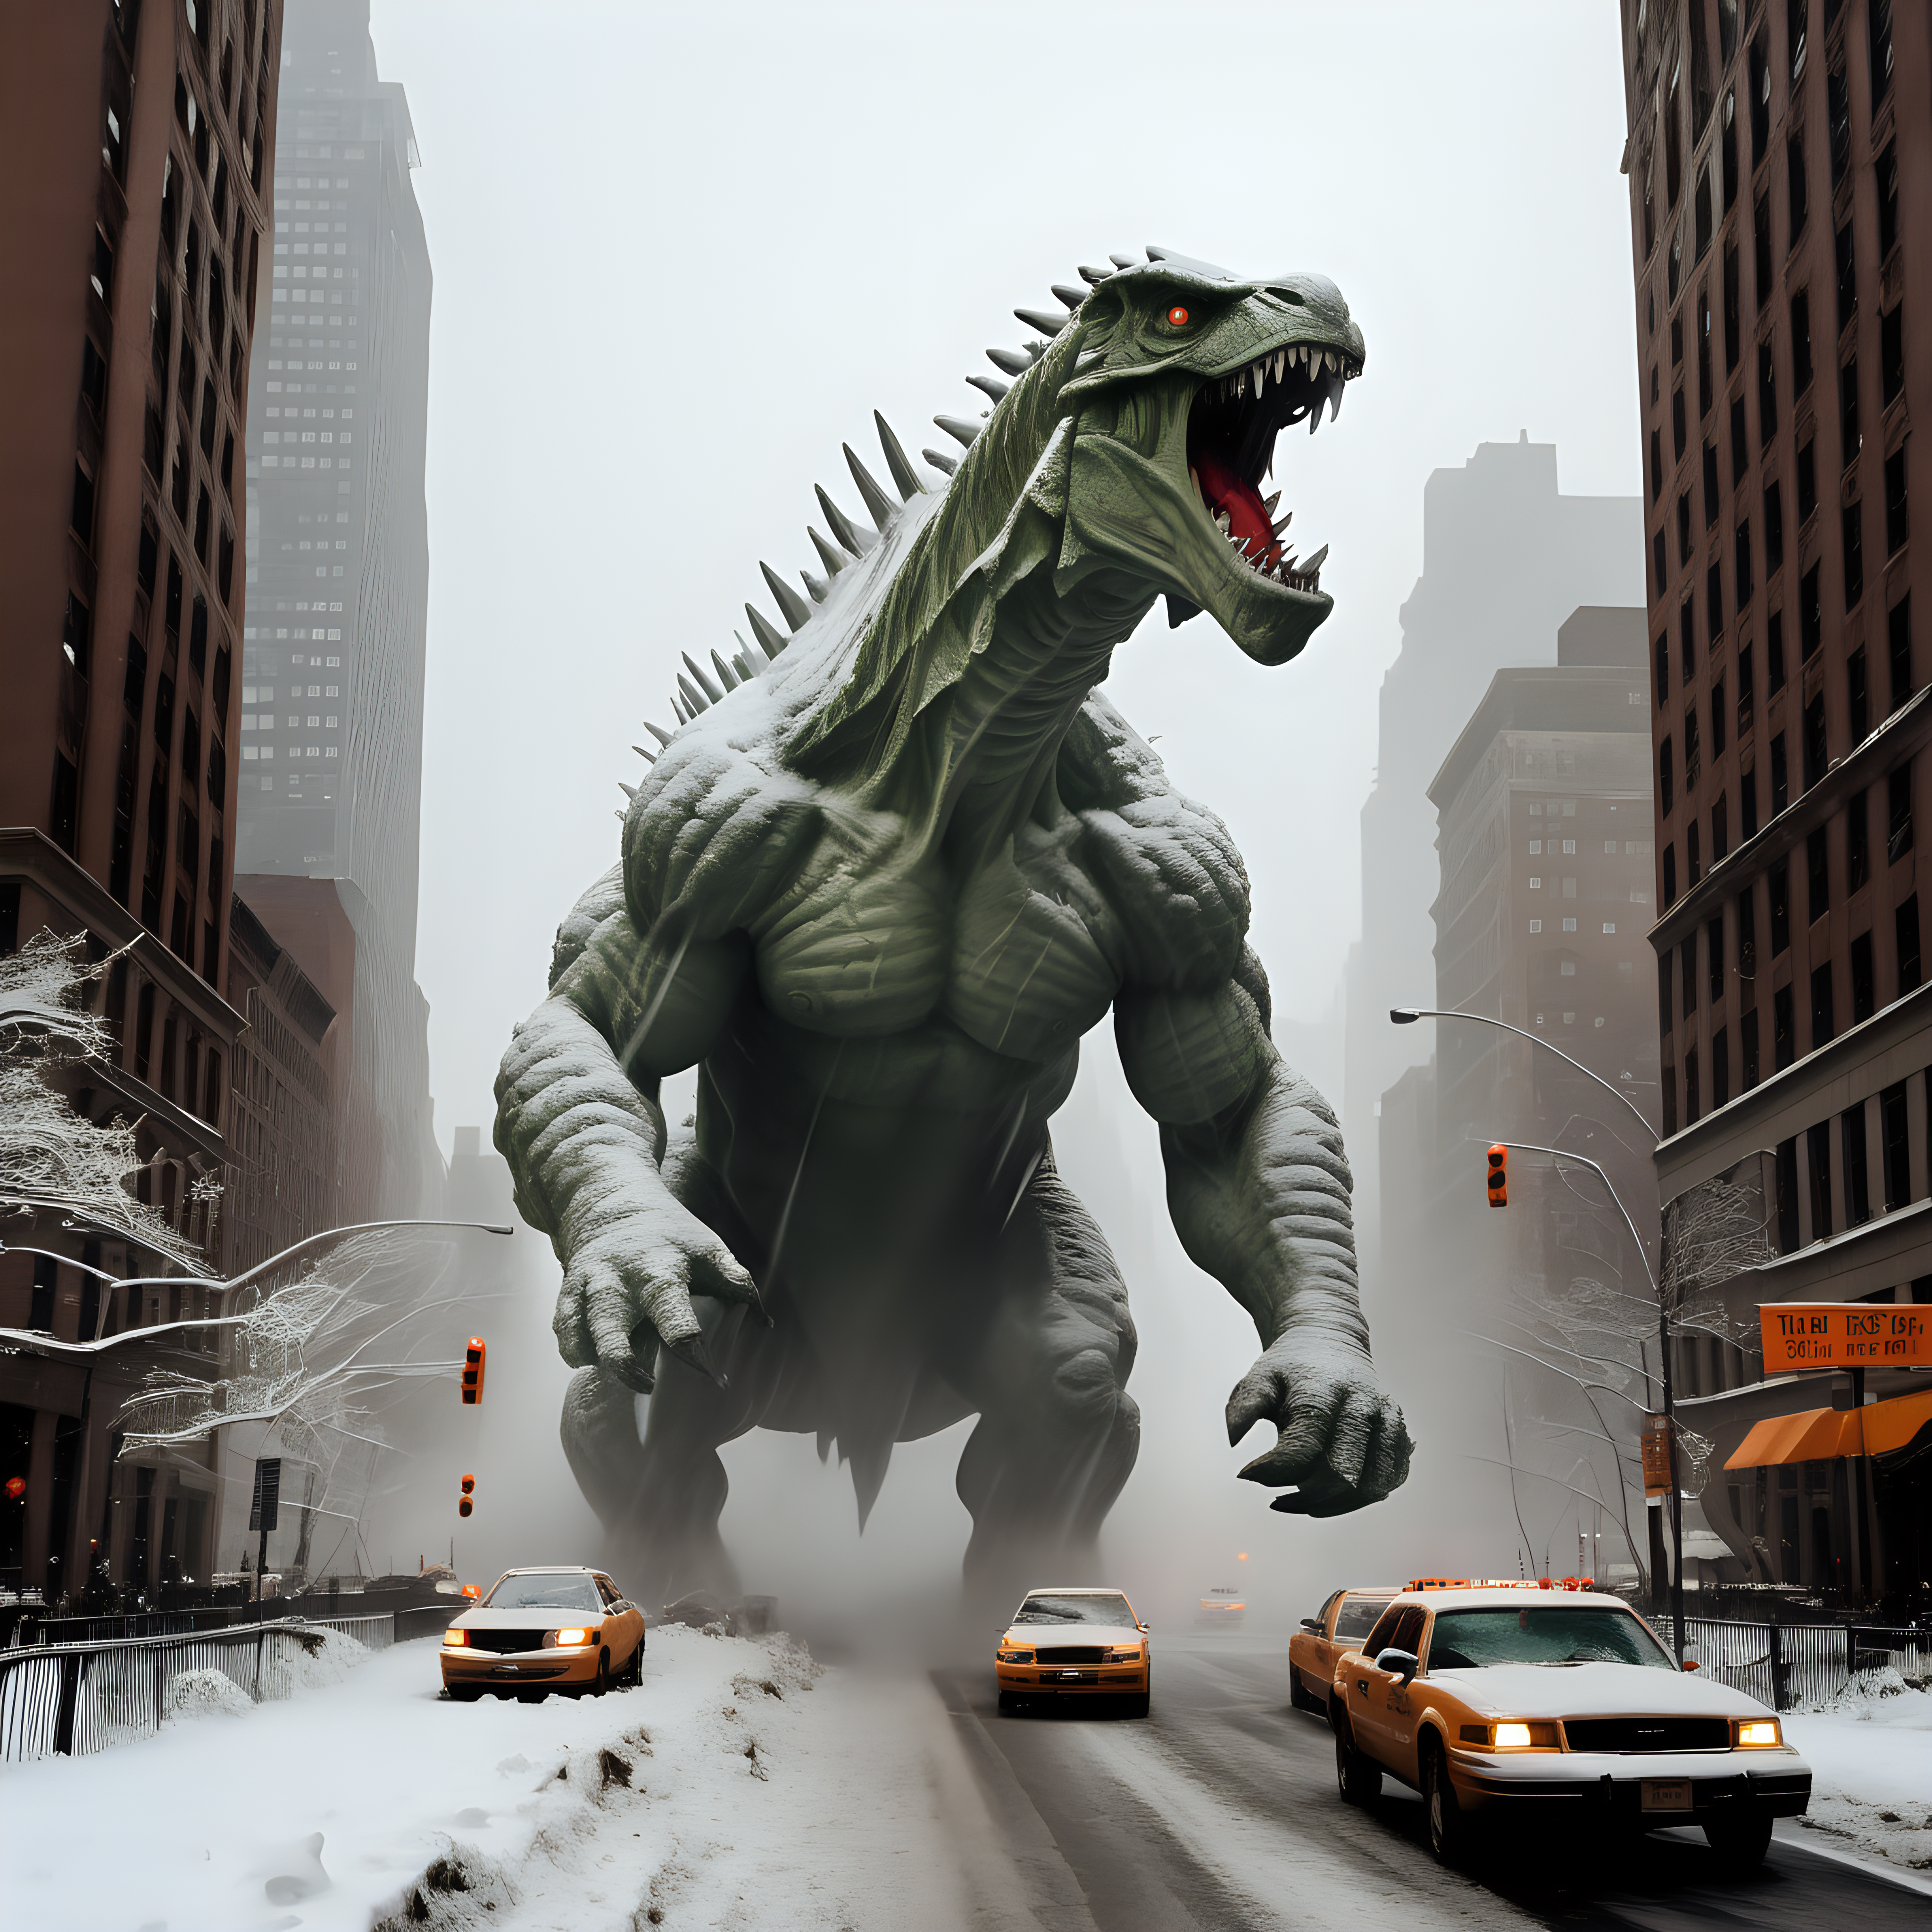 Gorgo destroying NYC in winter